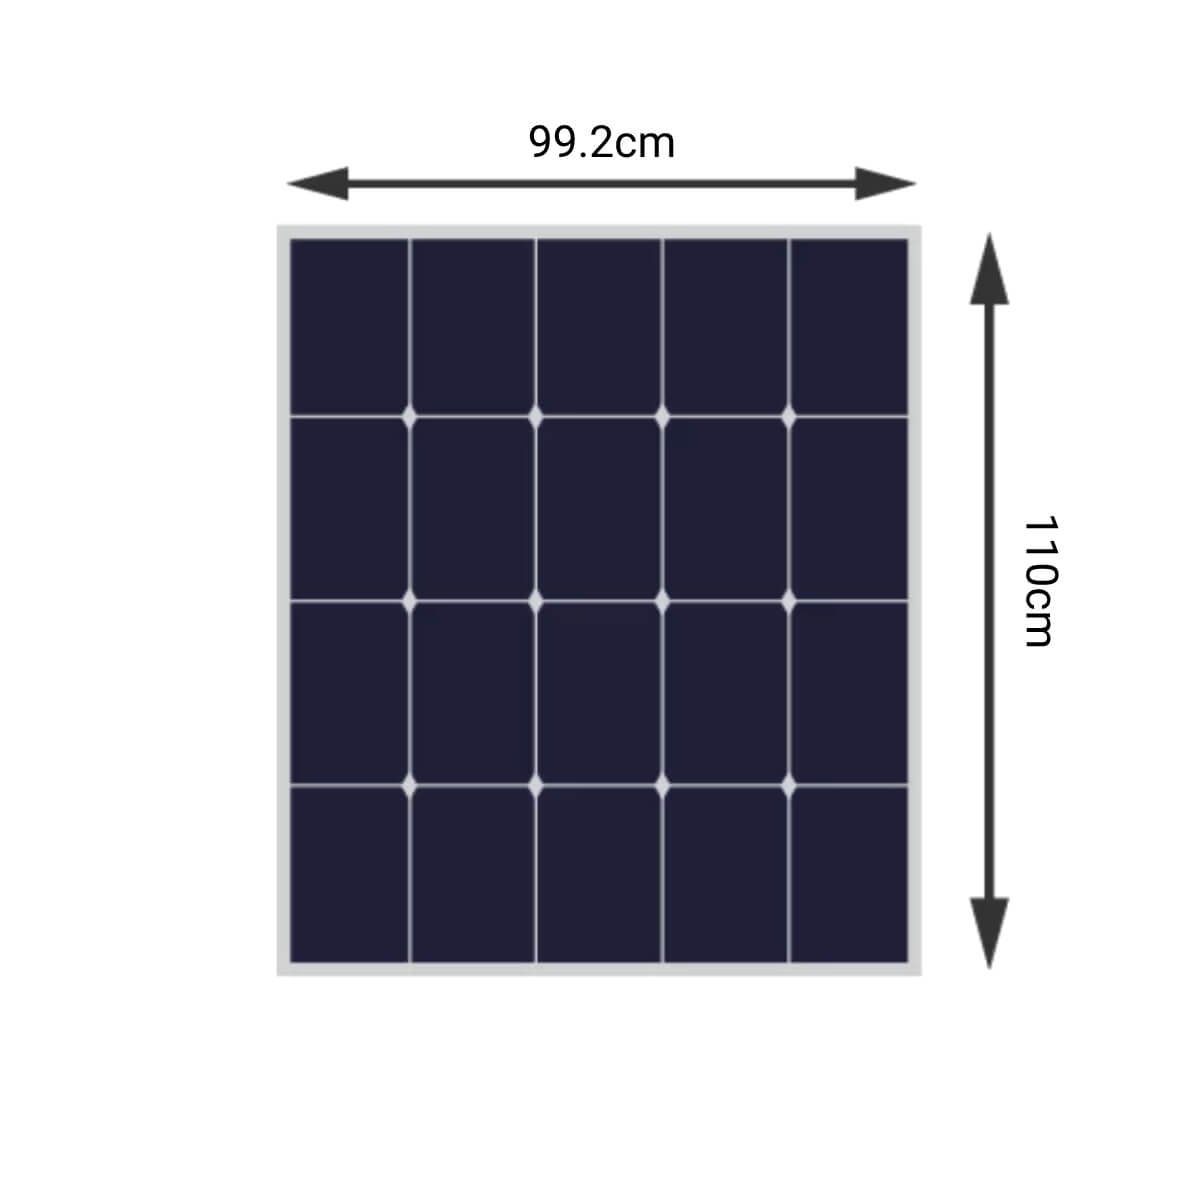 200W Solar Panel Kit – 1x 200W square dimensions